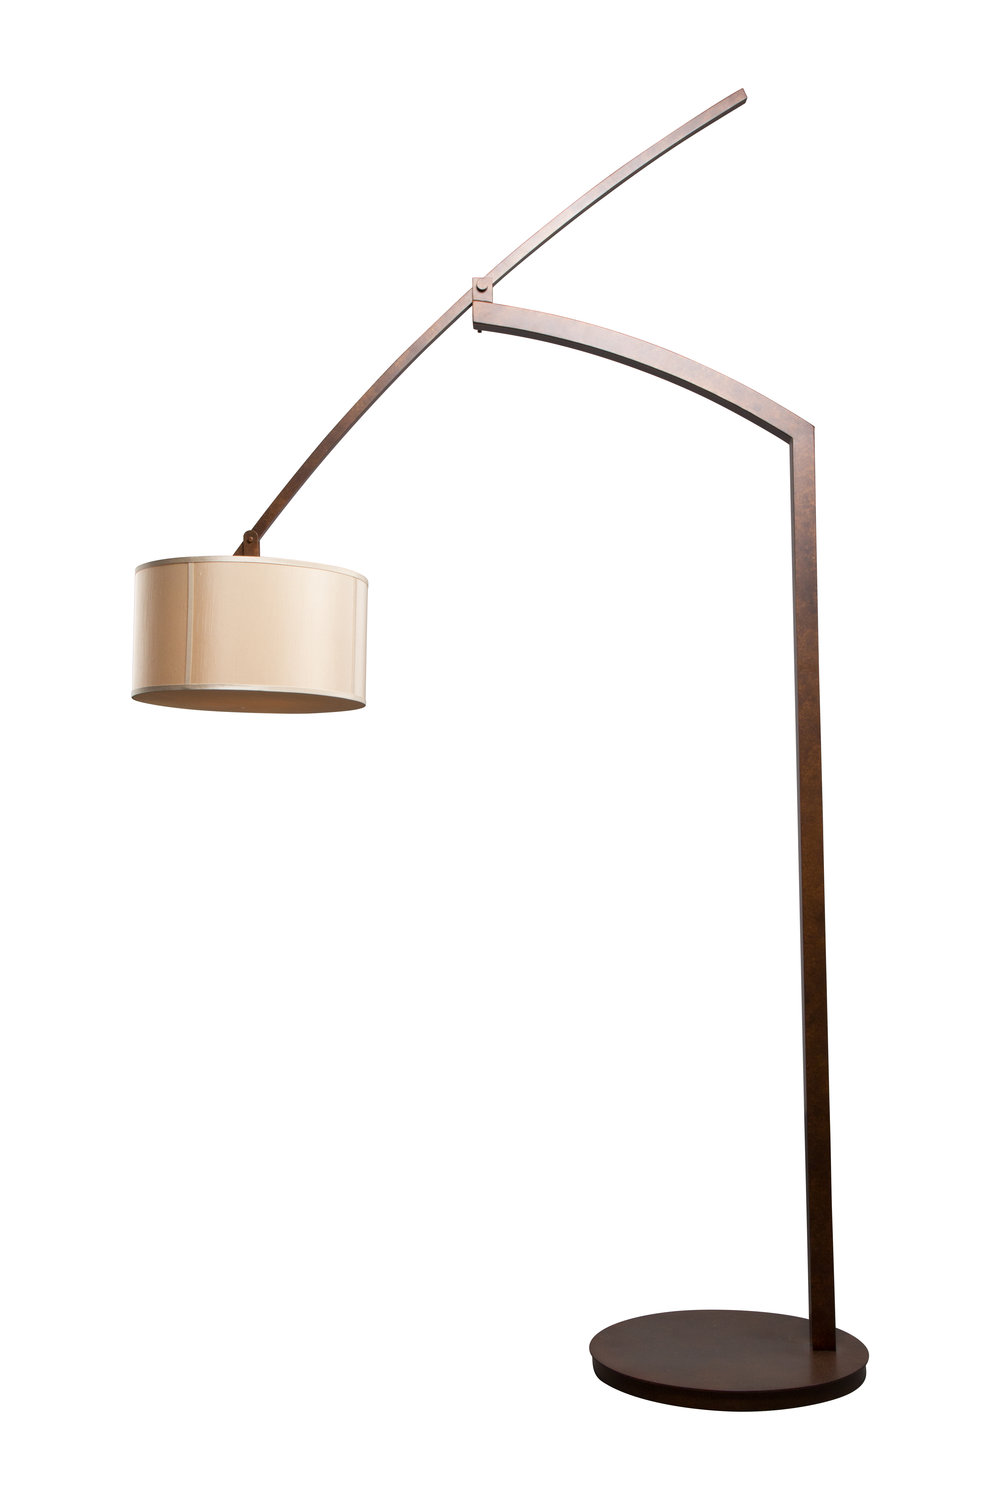 An oversized balanced arm floor lamp for a large mountain resort home. Custom design #DLA-B-004-9A-B